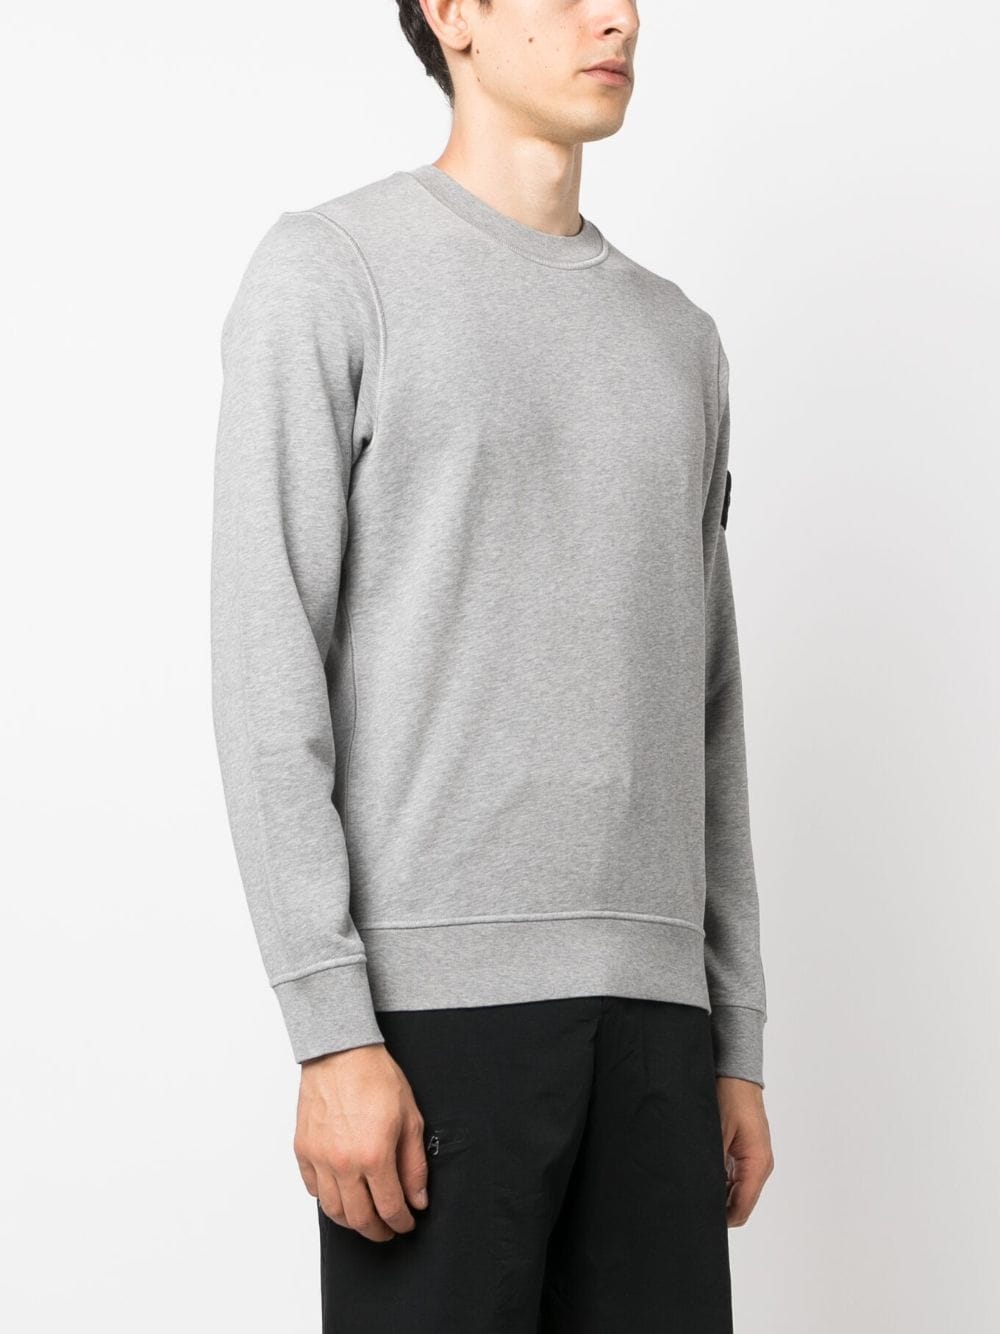 Stone Island Compass Patch Cotton Sweatshirt in Grey